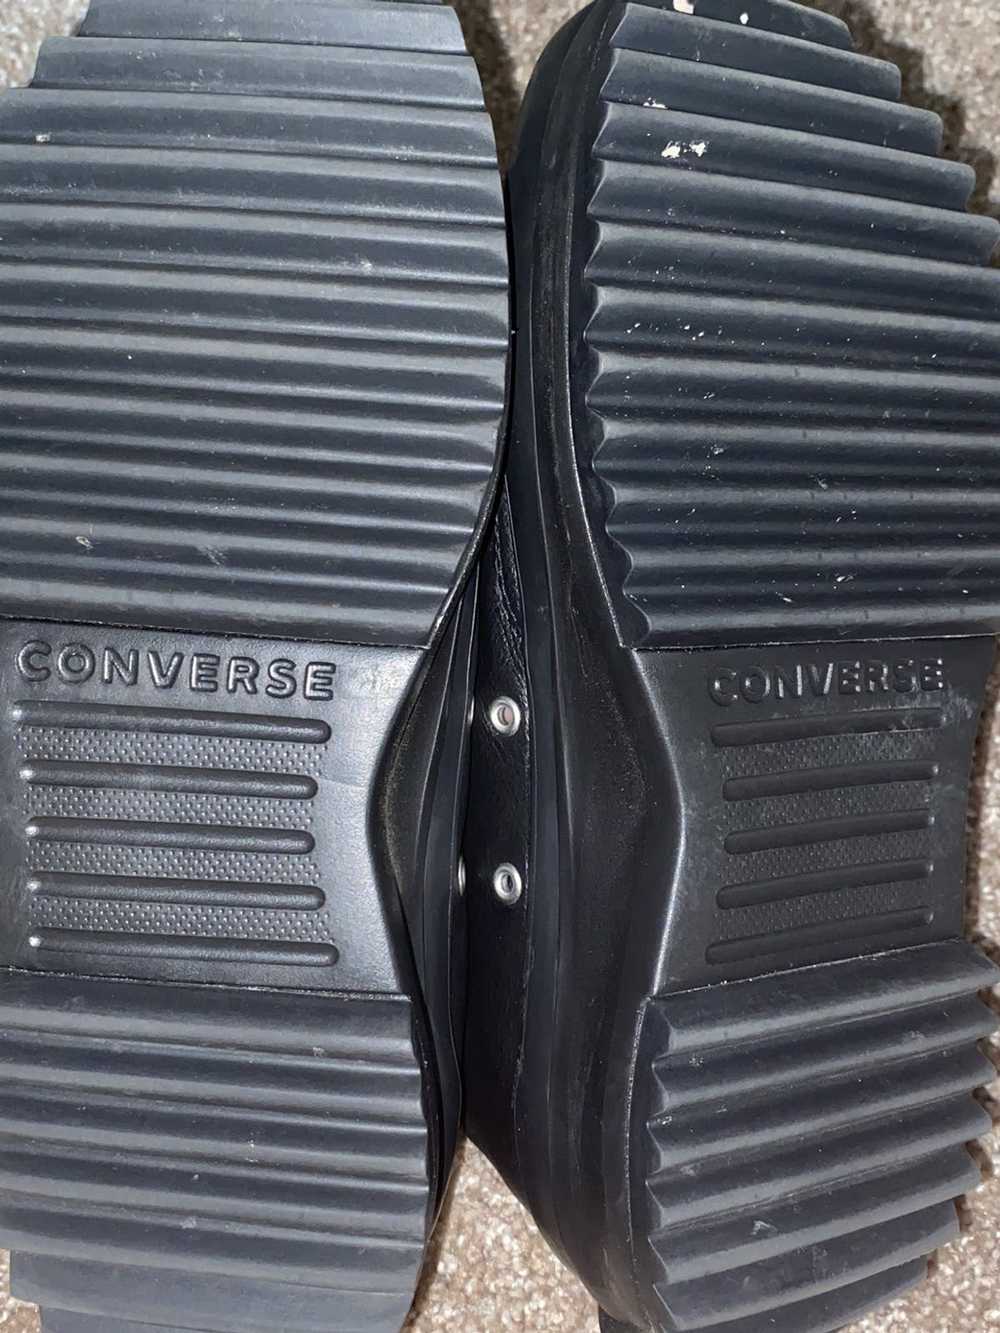 Converse Converse - image 9